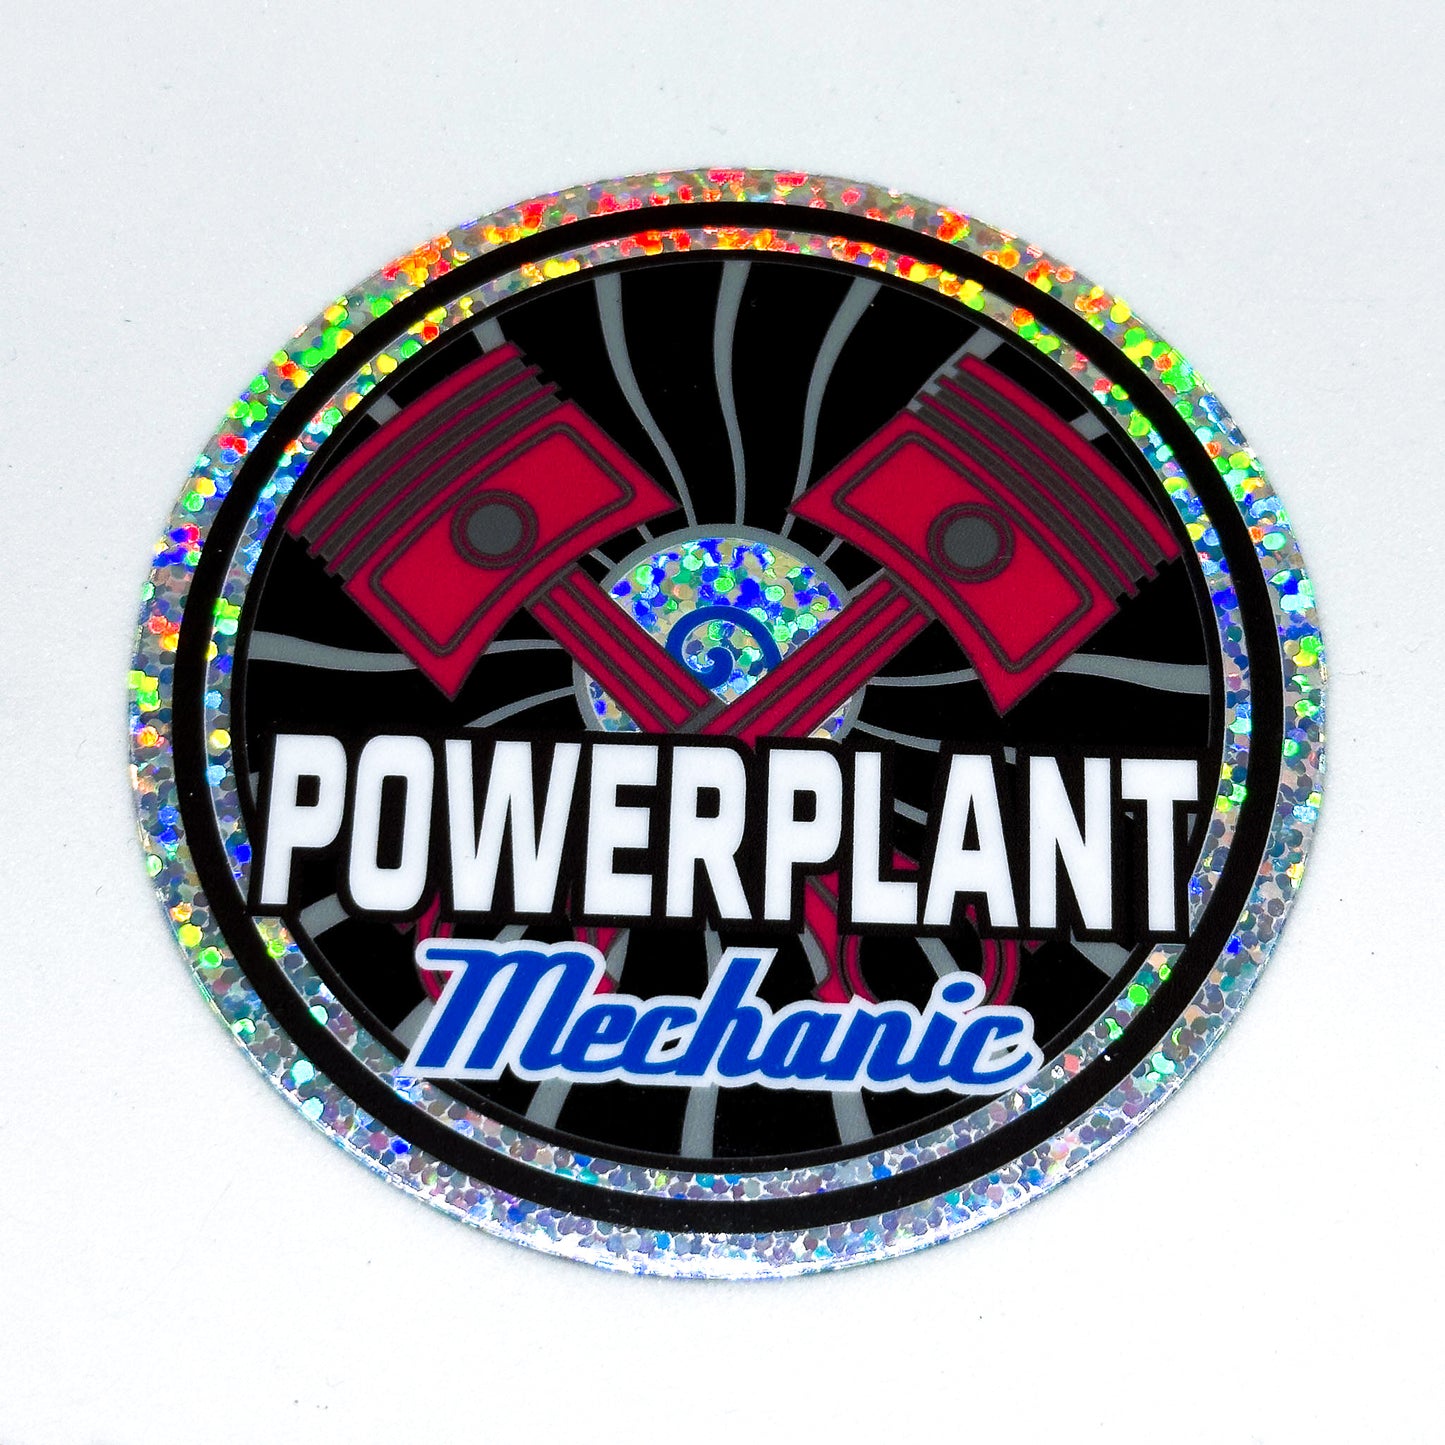 Powerplant Mechanic Glitter Sticker